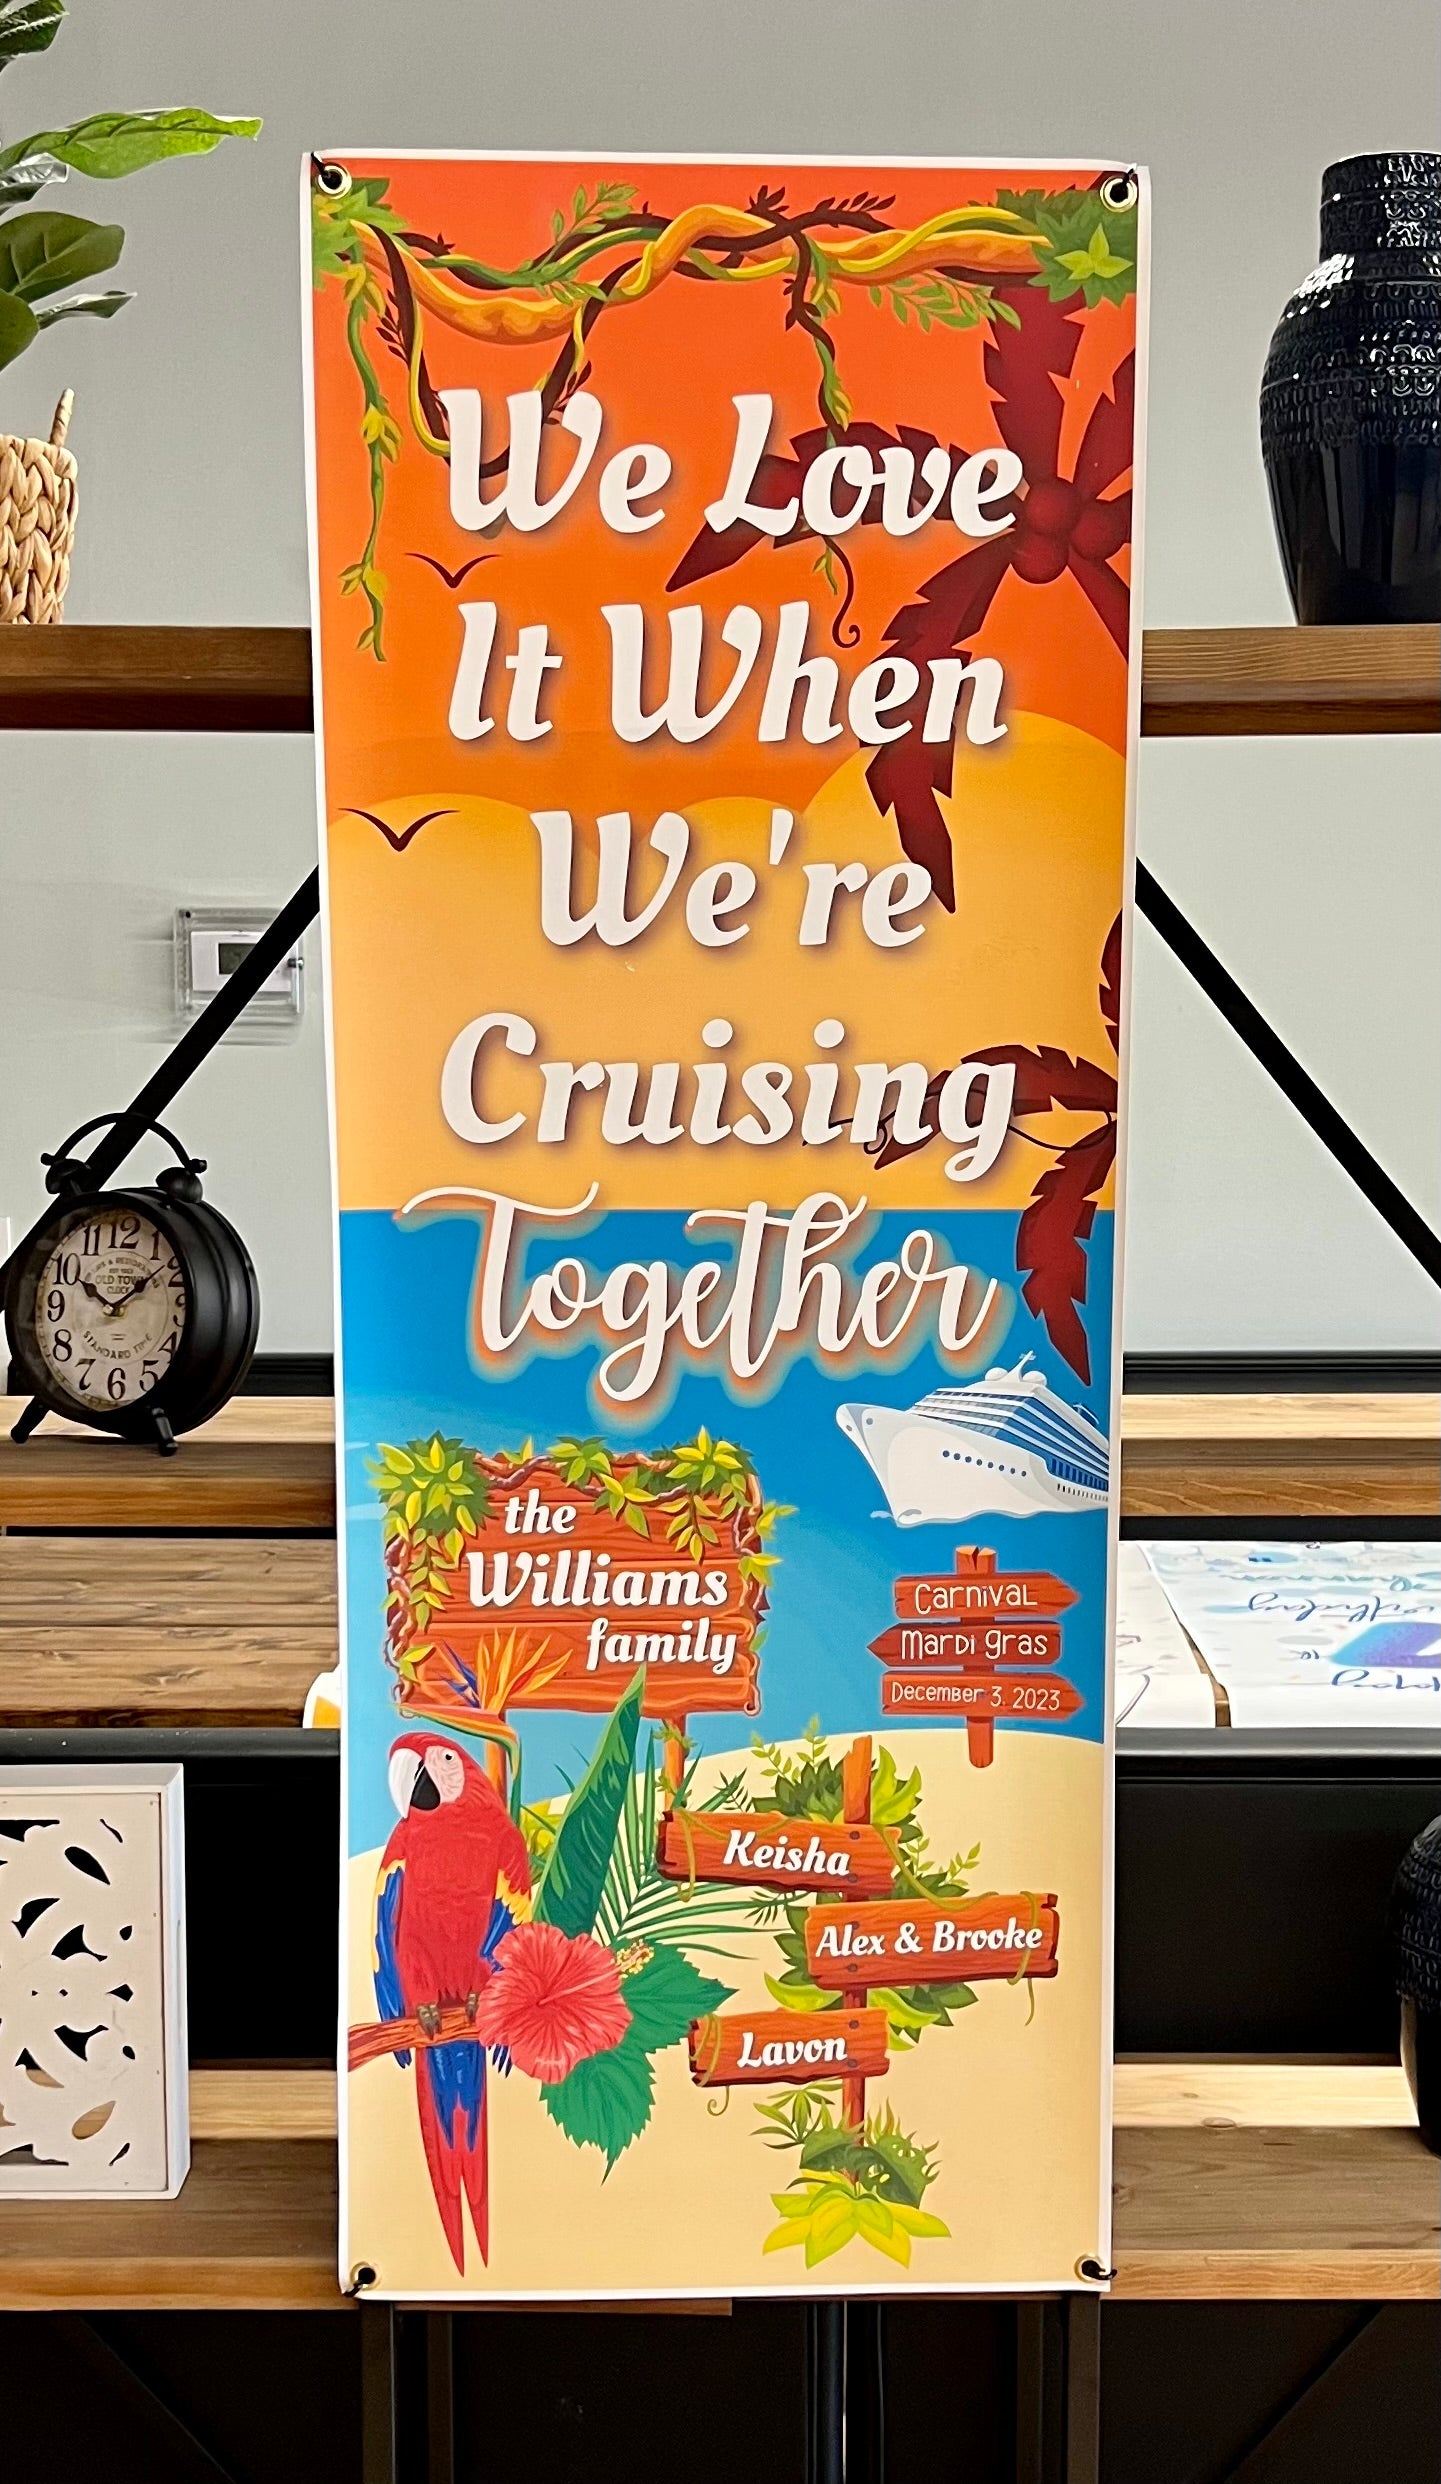 Cruise Life Cruise Cabin Door Banner - Travel/Cruising Together